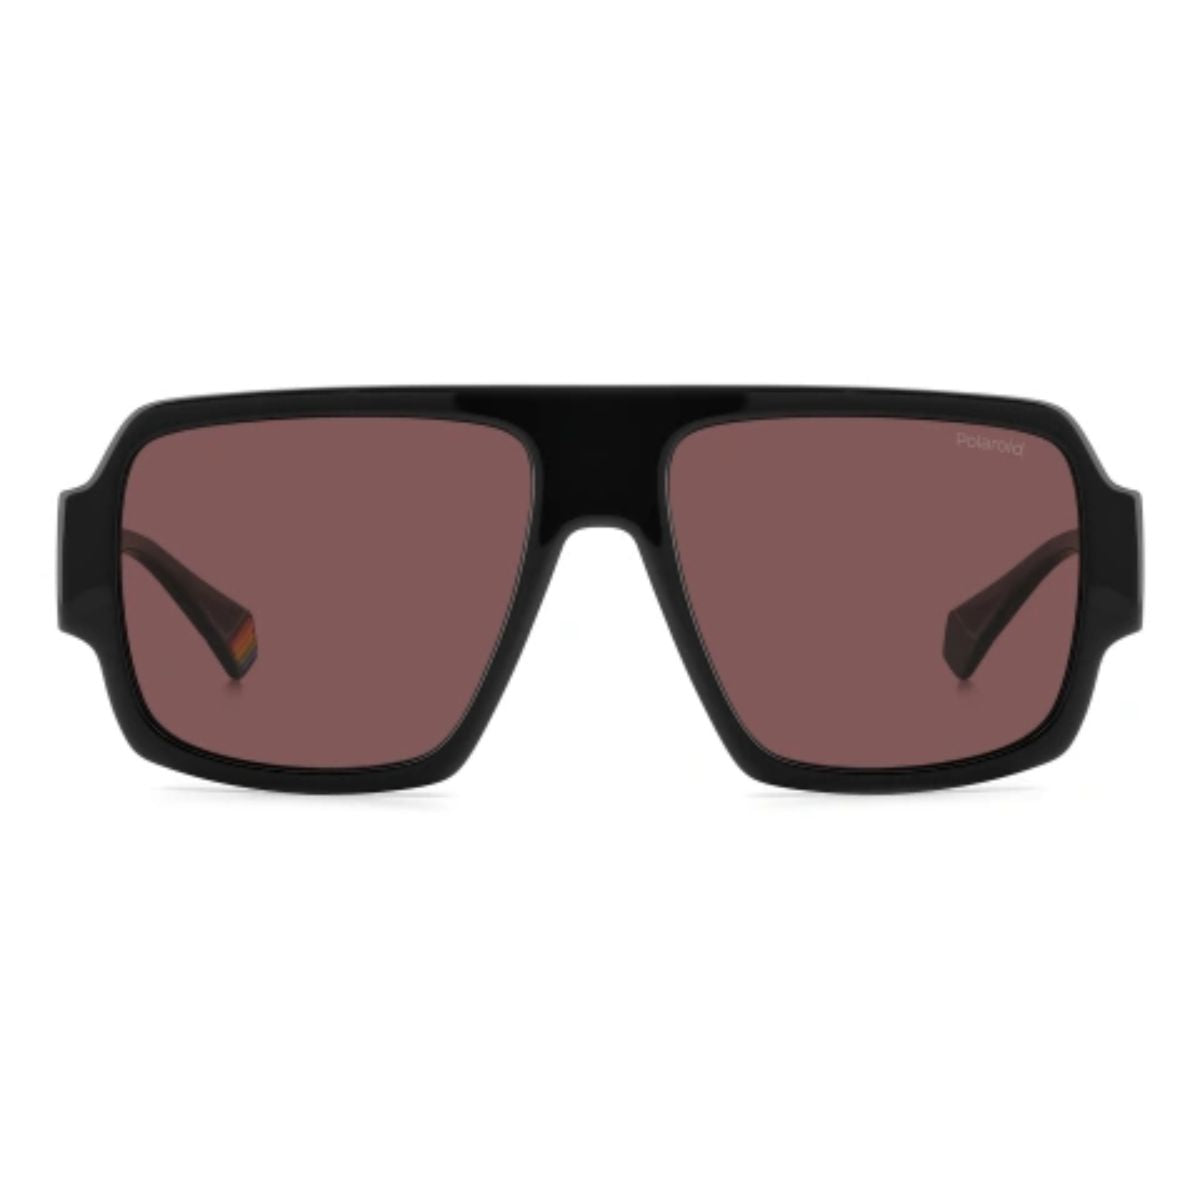 "Stylish Polaroid 6209 Square Polarized Sunglasses For Men's At Optorium"